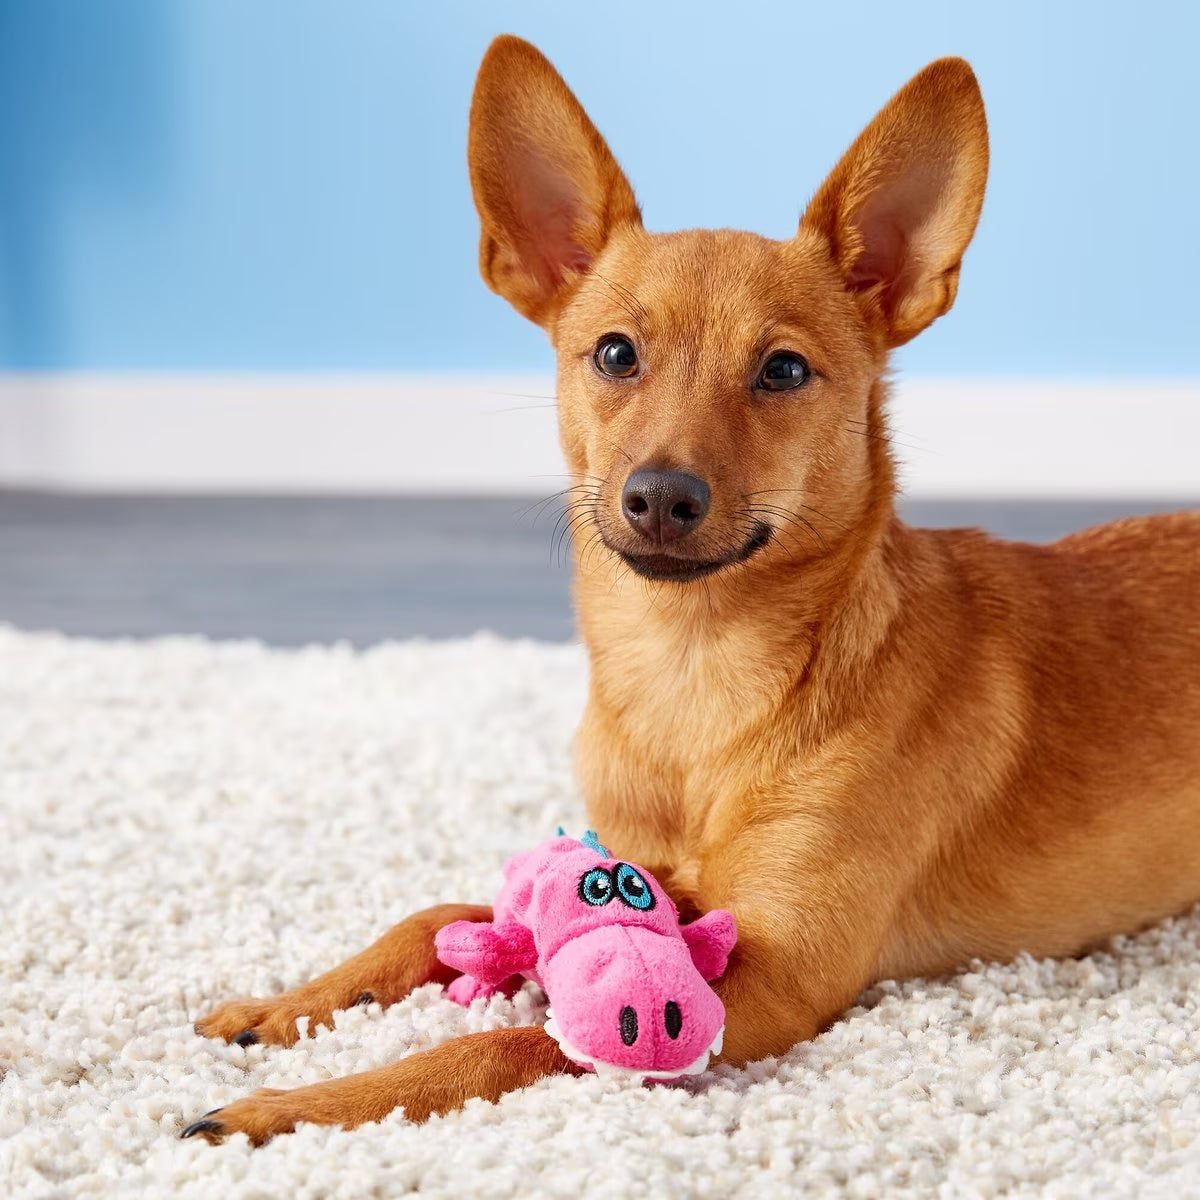 Mini - Pink and Blue Gators - Chew Guard Dog Toy